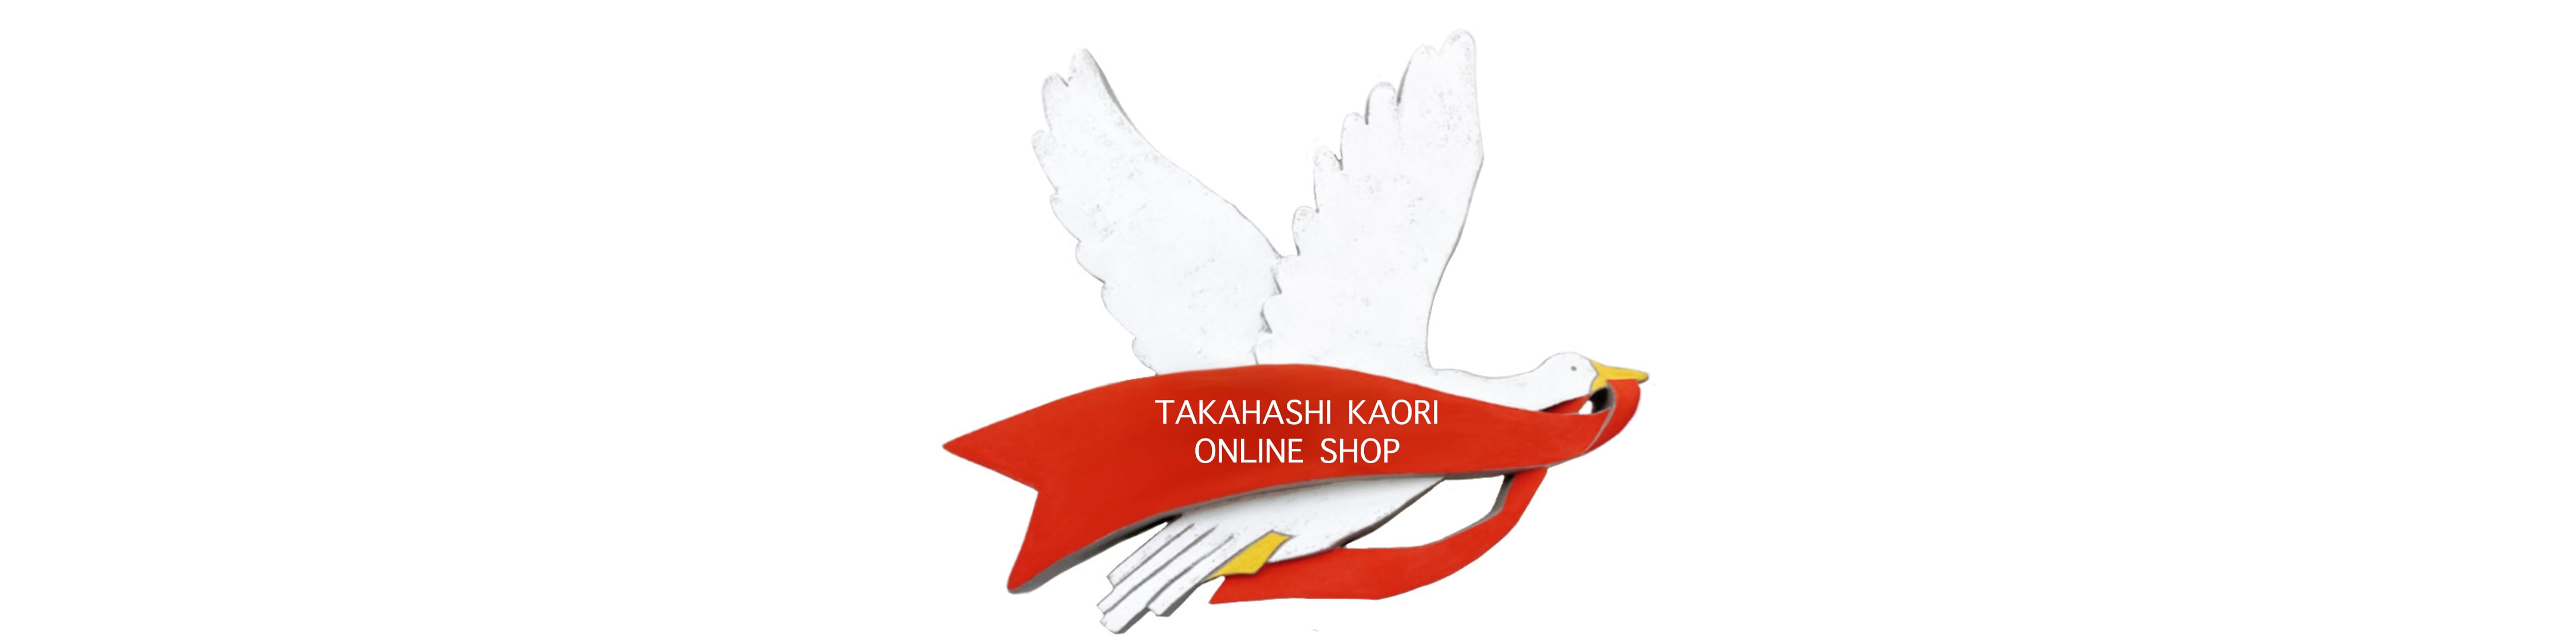 TAKAHASHI SHOP